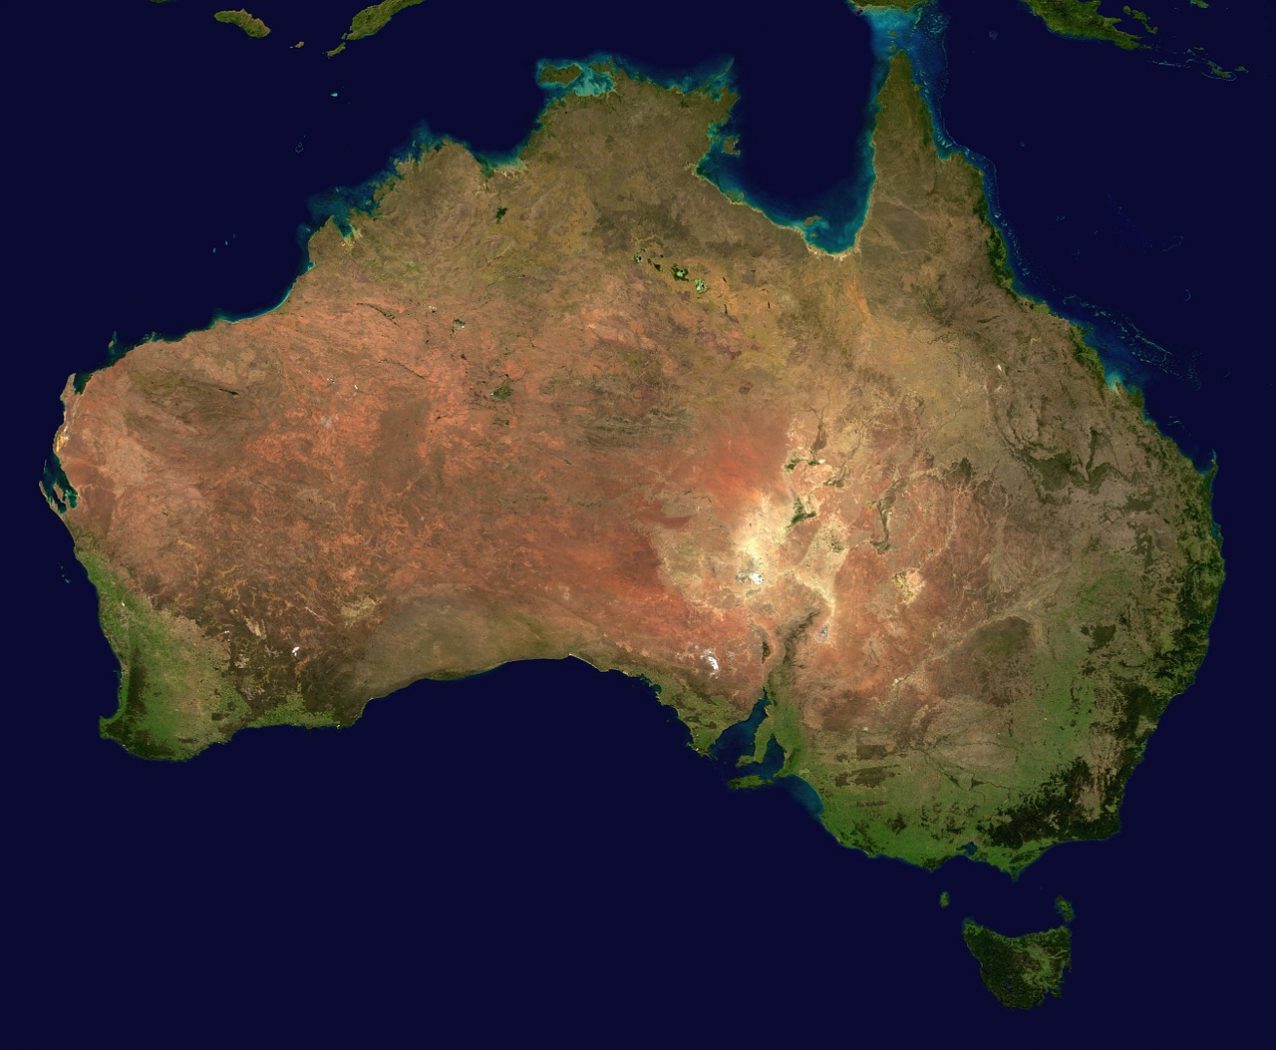 Australia travel tips: Australia is huge!